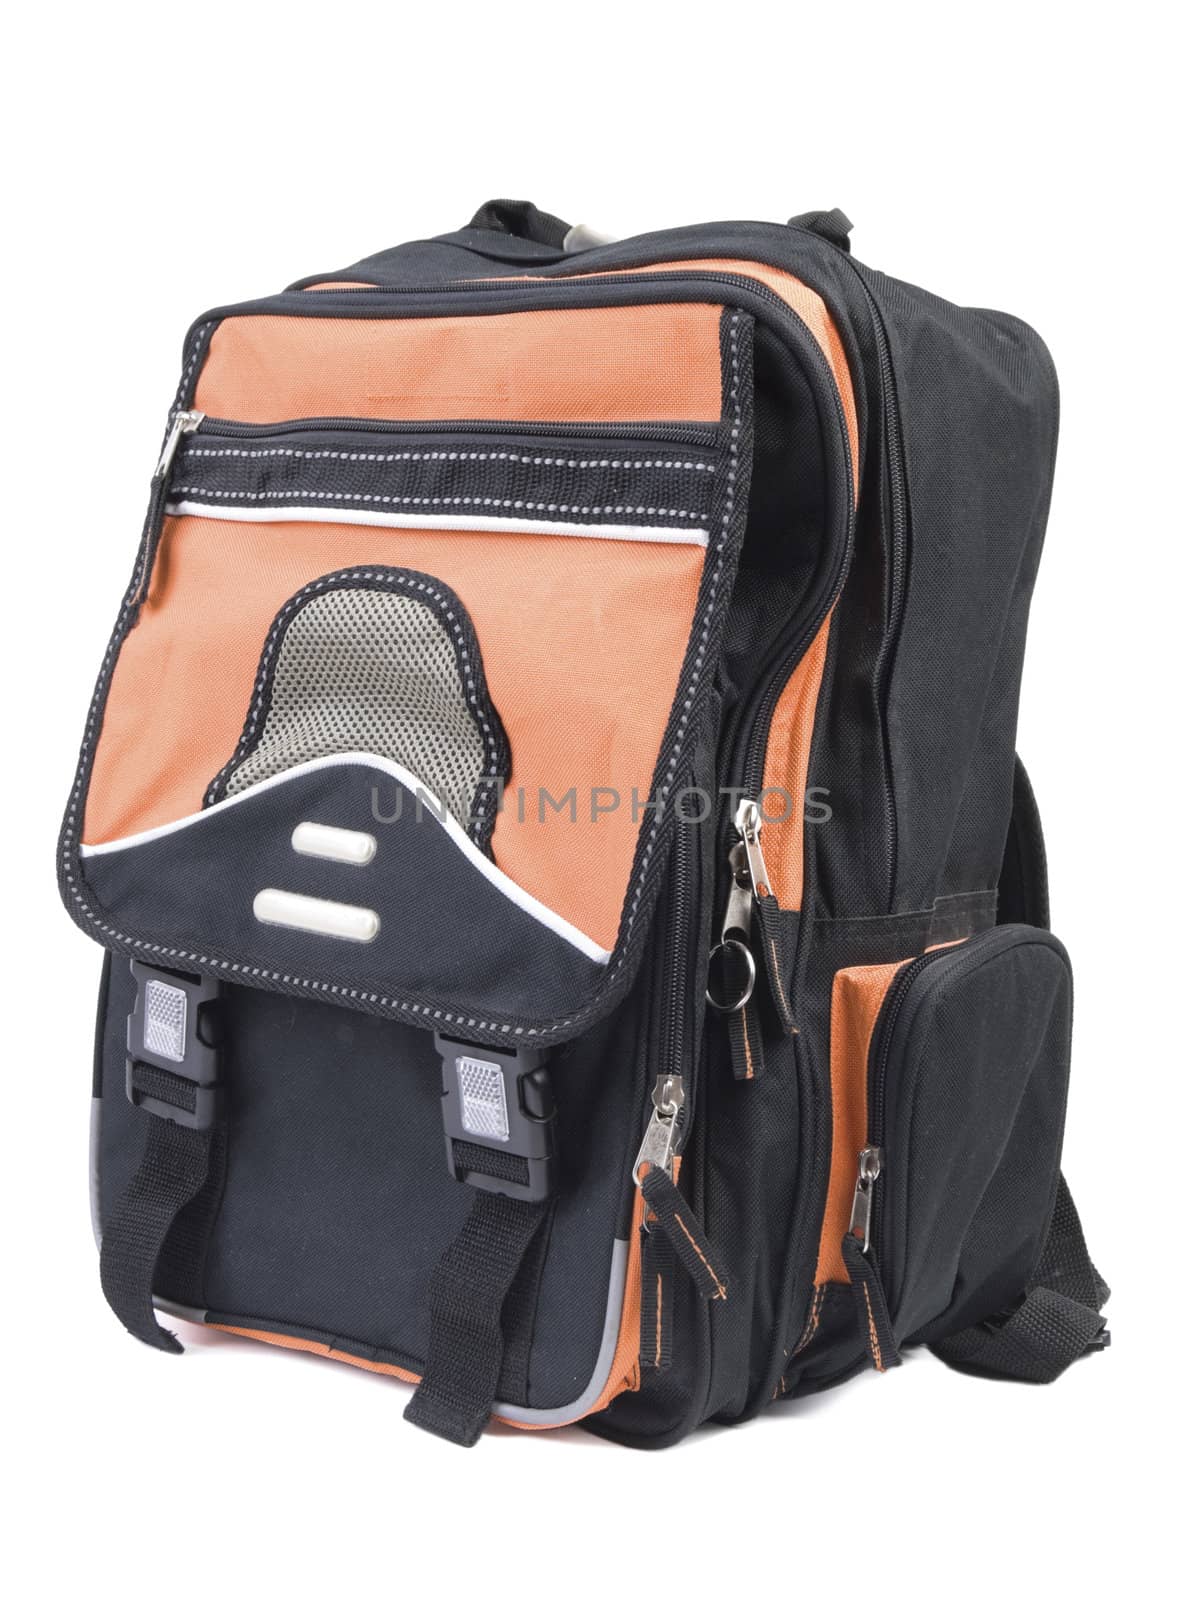 Black backpack with orange details. Isolated on white background